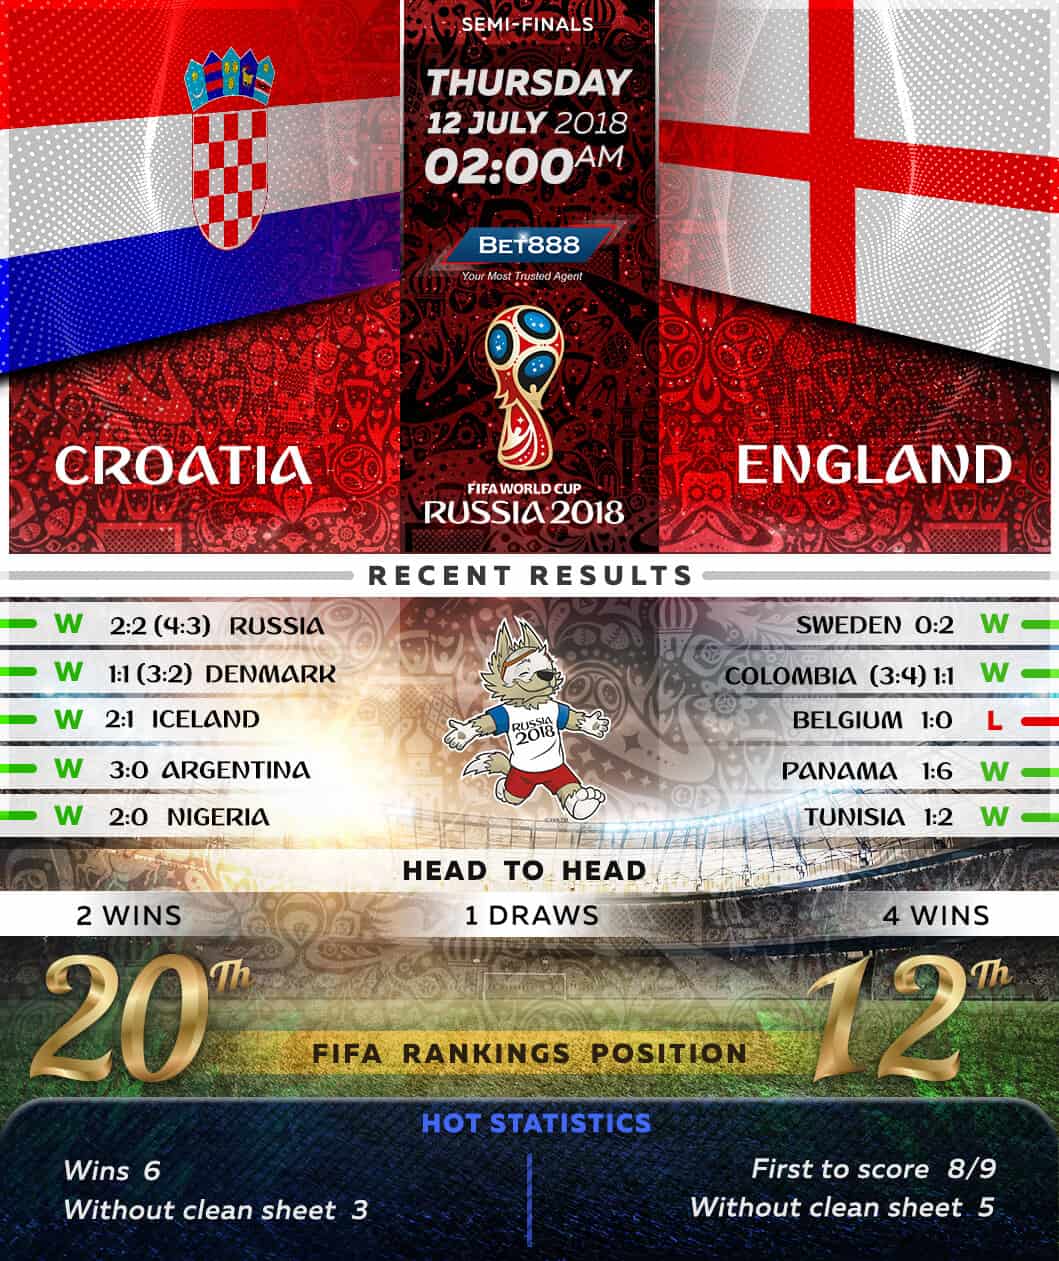 Croatia vs England 12/07/18